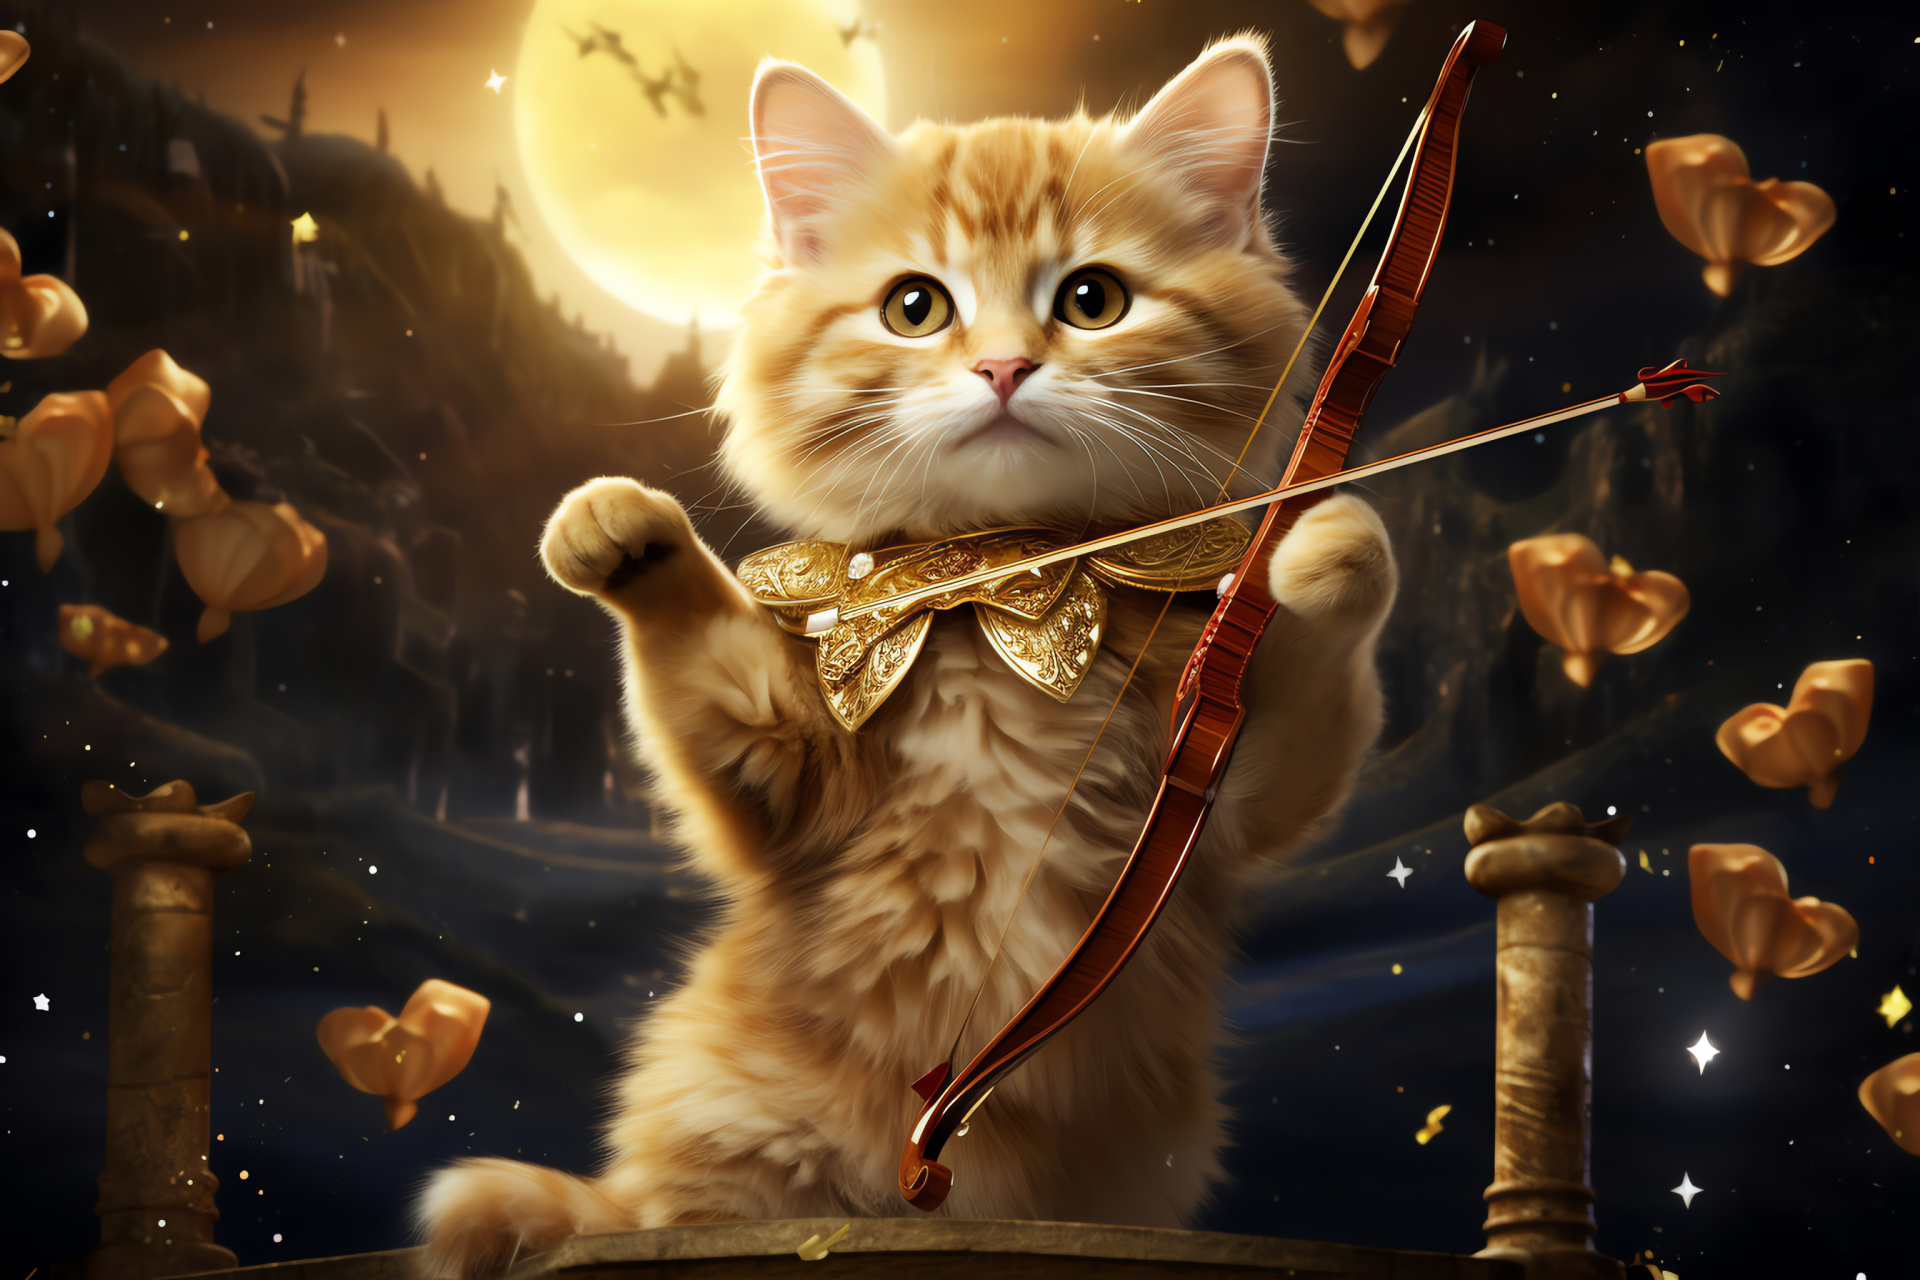 Feline affection, Celebration of love, Mythical archer, Nocturnal sky, Glittering heavens, HD Desktop Wallpaper